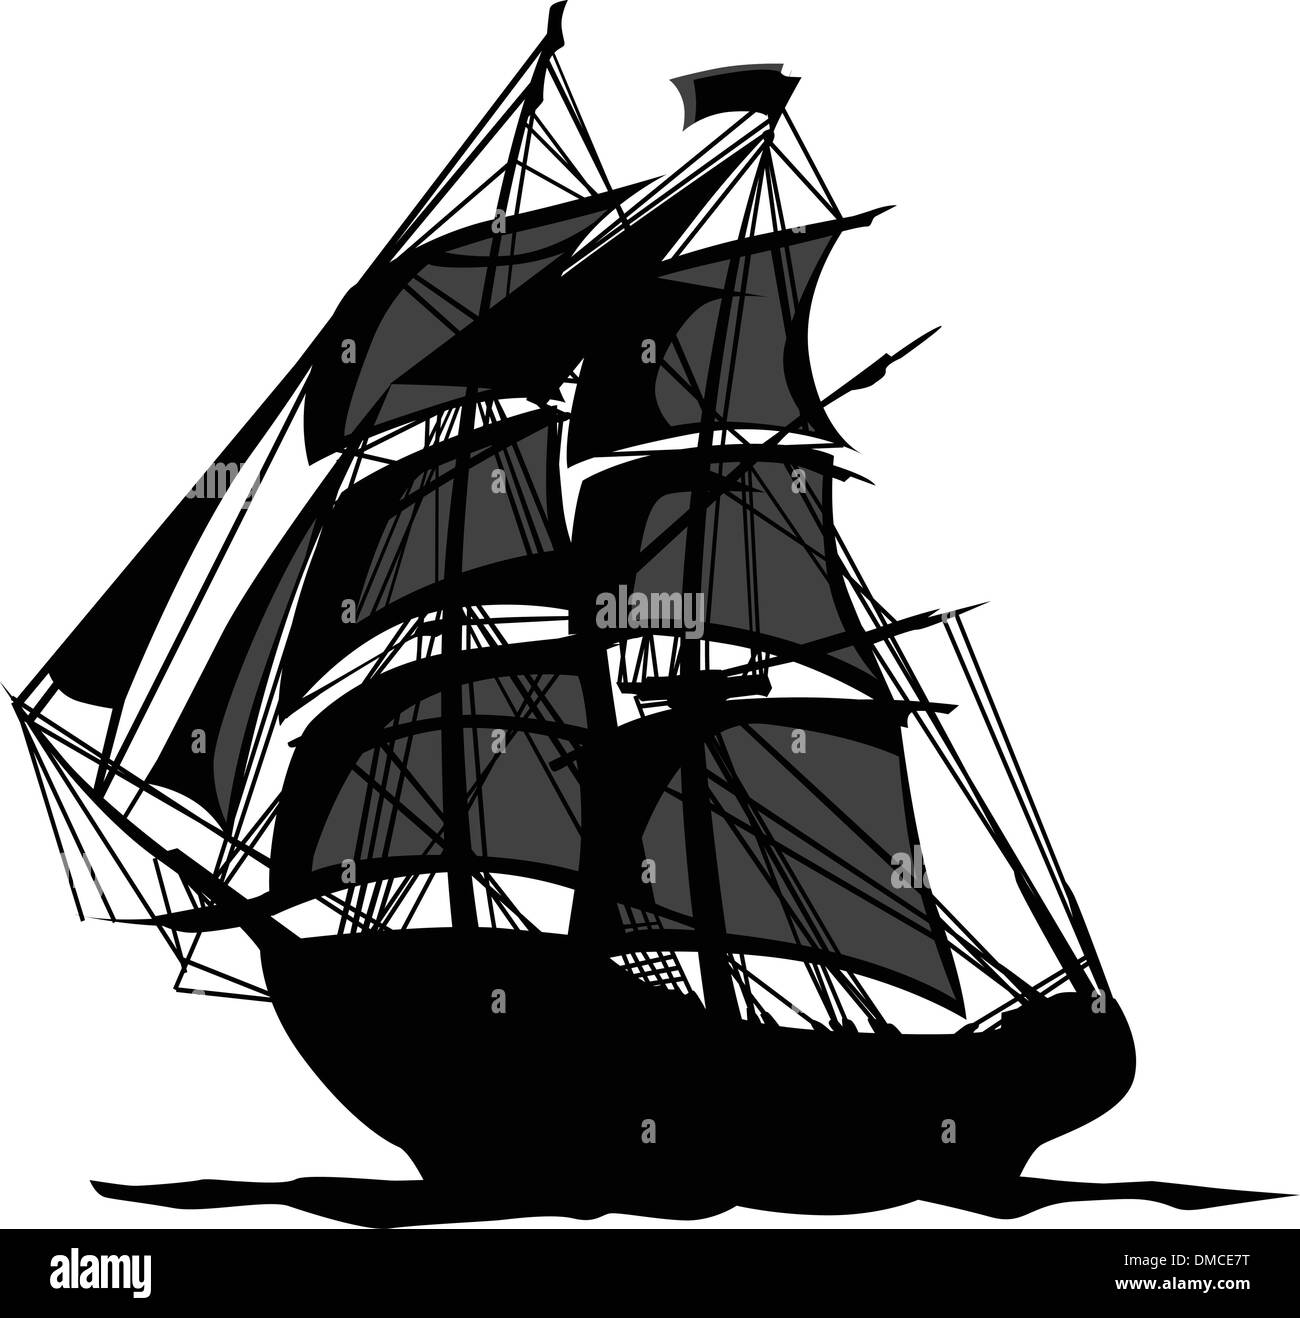 Piratenschiff mit Schatten in Segel-Grafik Vektor-Illustration Stock Vektor